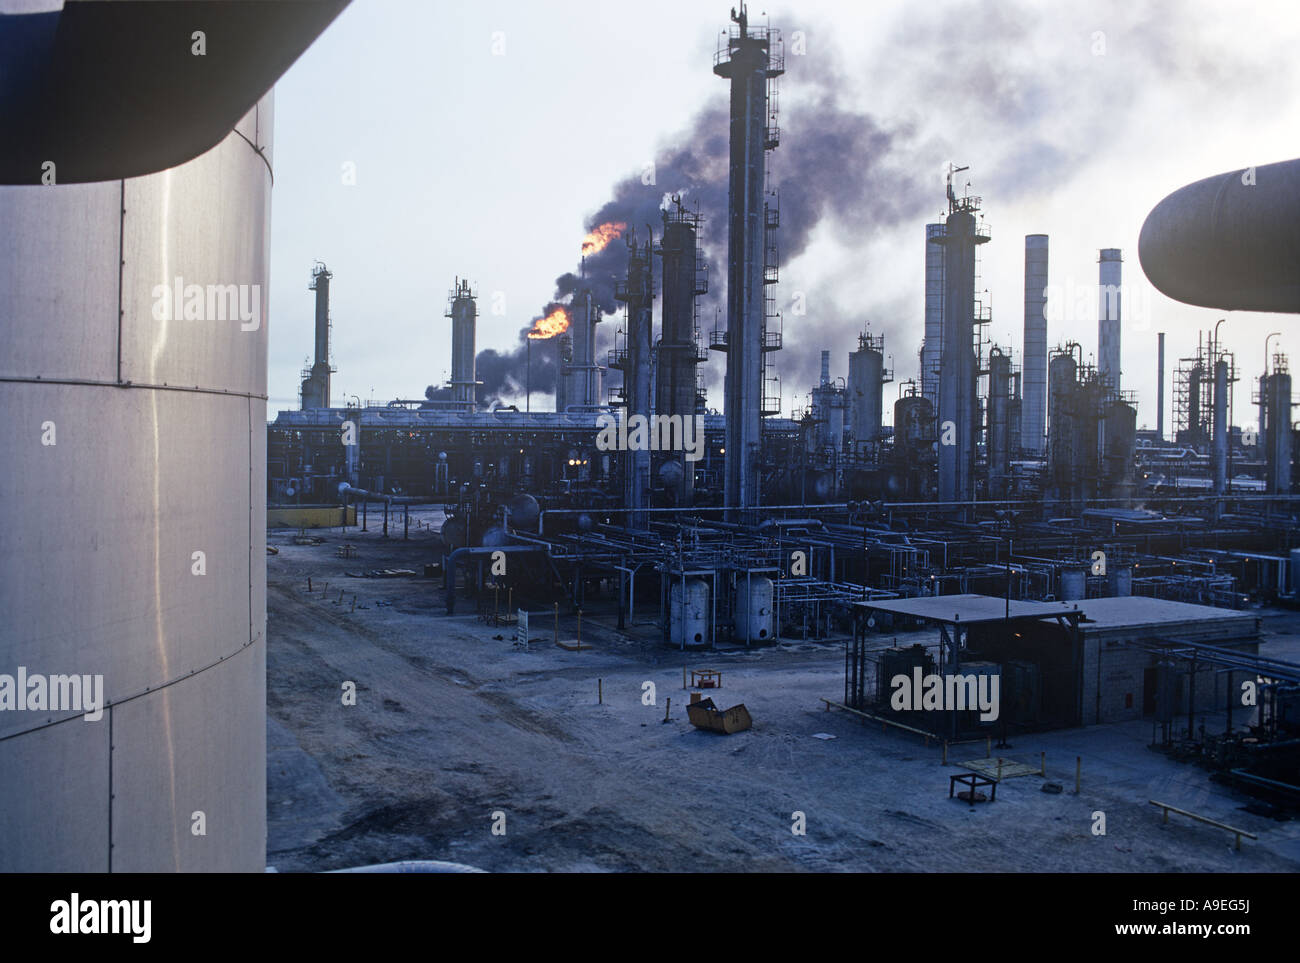 Saudi Arabia, Ras Tanura oil Refinery.It is the HQ of Saudi Aramco the American co, set up at the time of King Abdul Aziz(1938). Stock Photo